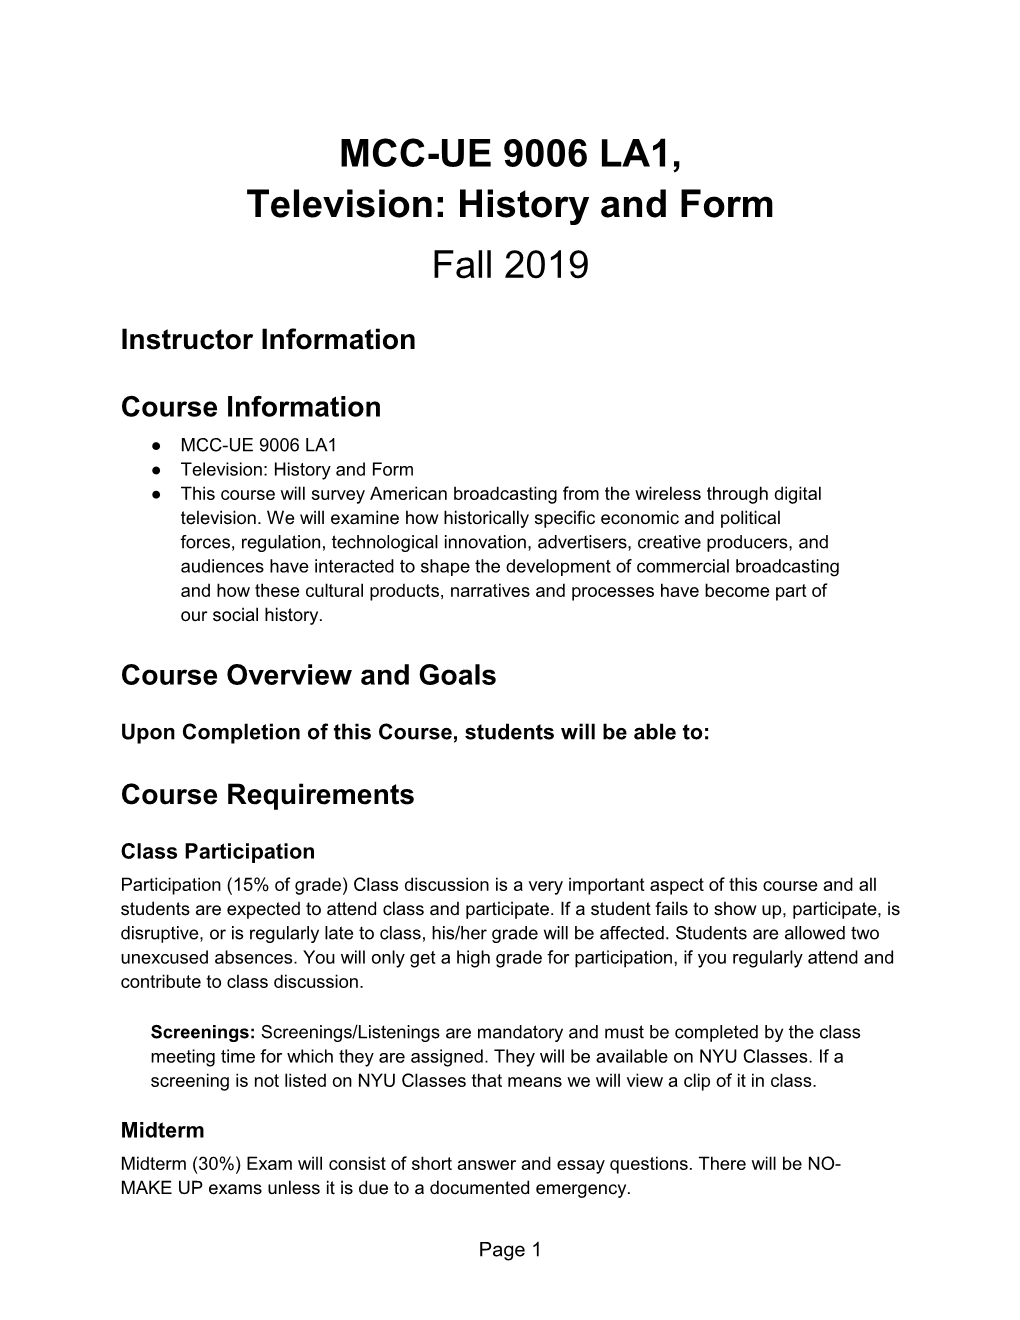 MCC-UE 9006 LA1, Television: History and Form Fall 2019